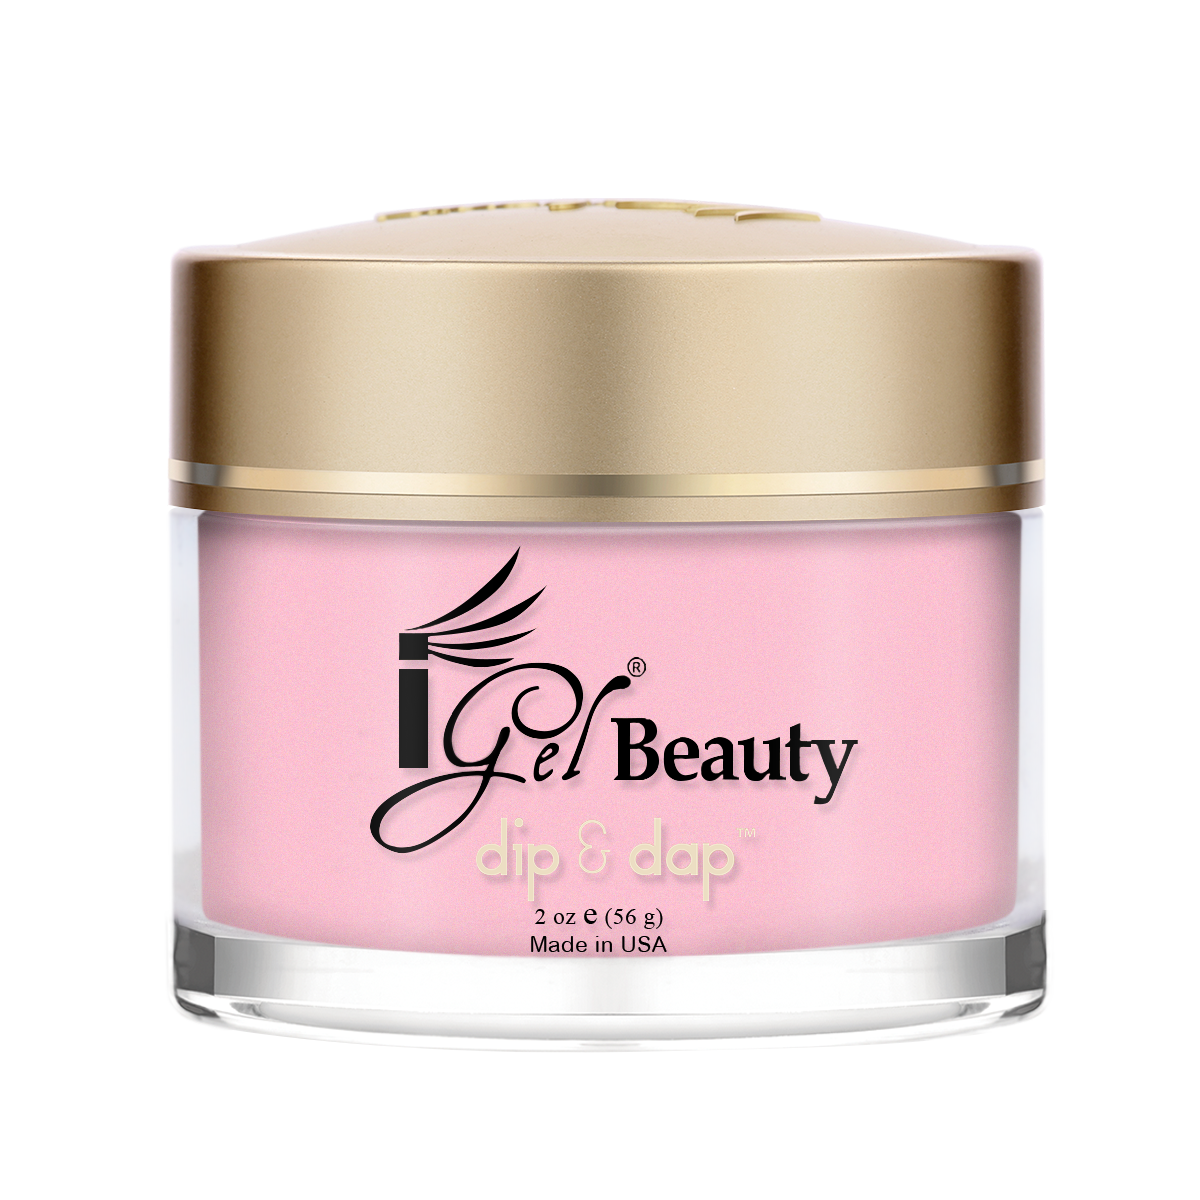 DP04 Medium Pink Dip & Dap Powder 2oz by iGel Beauty